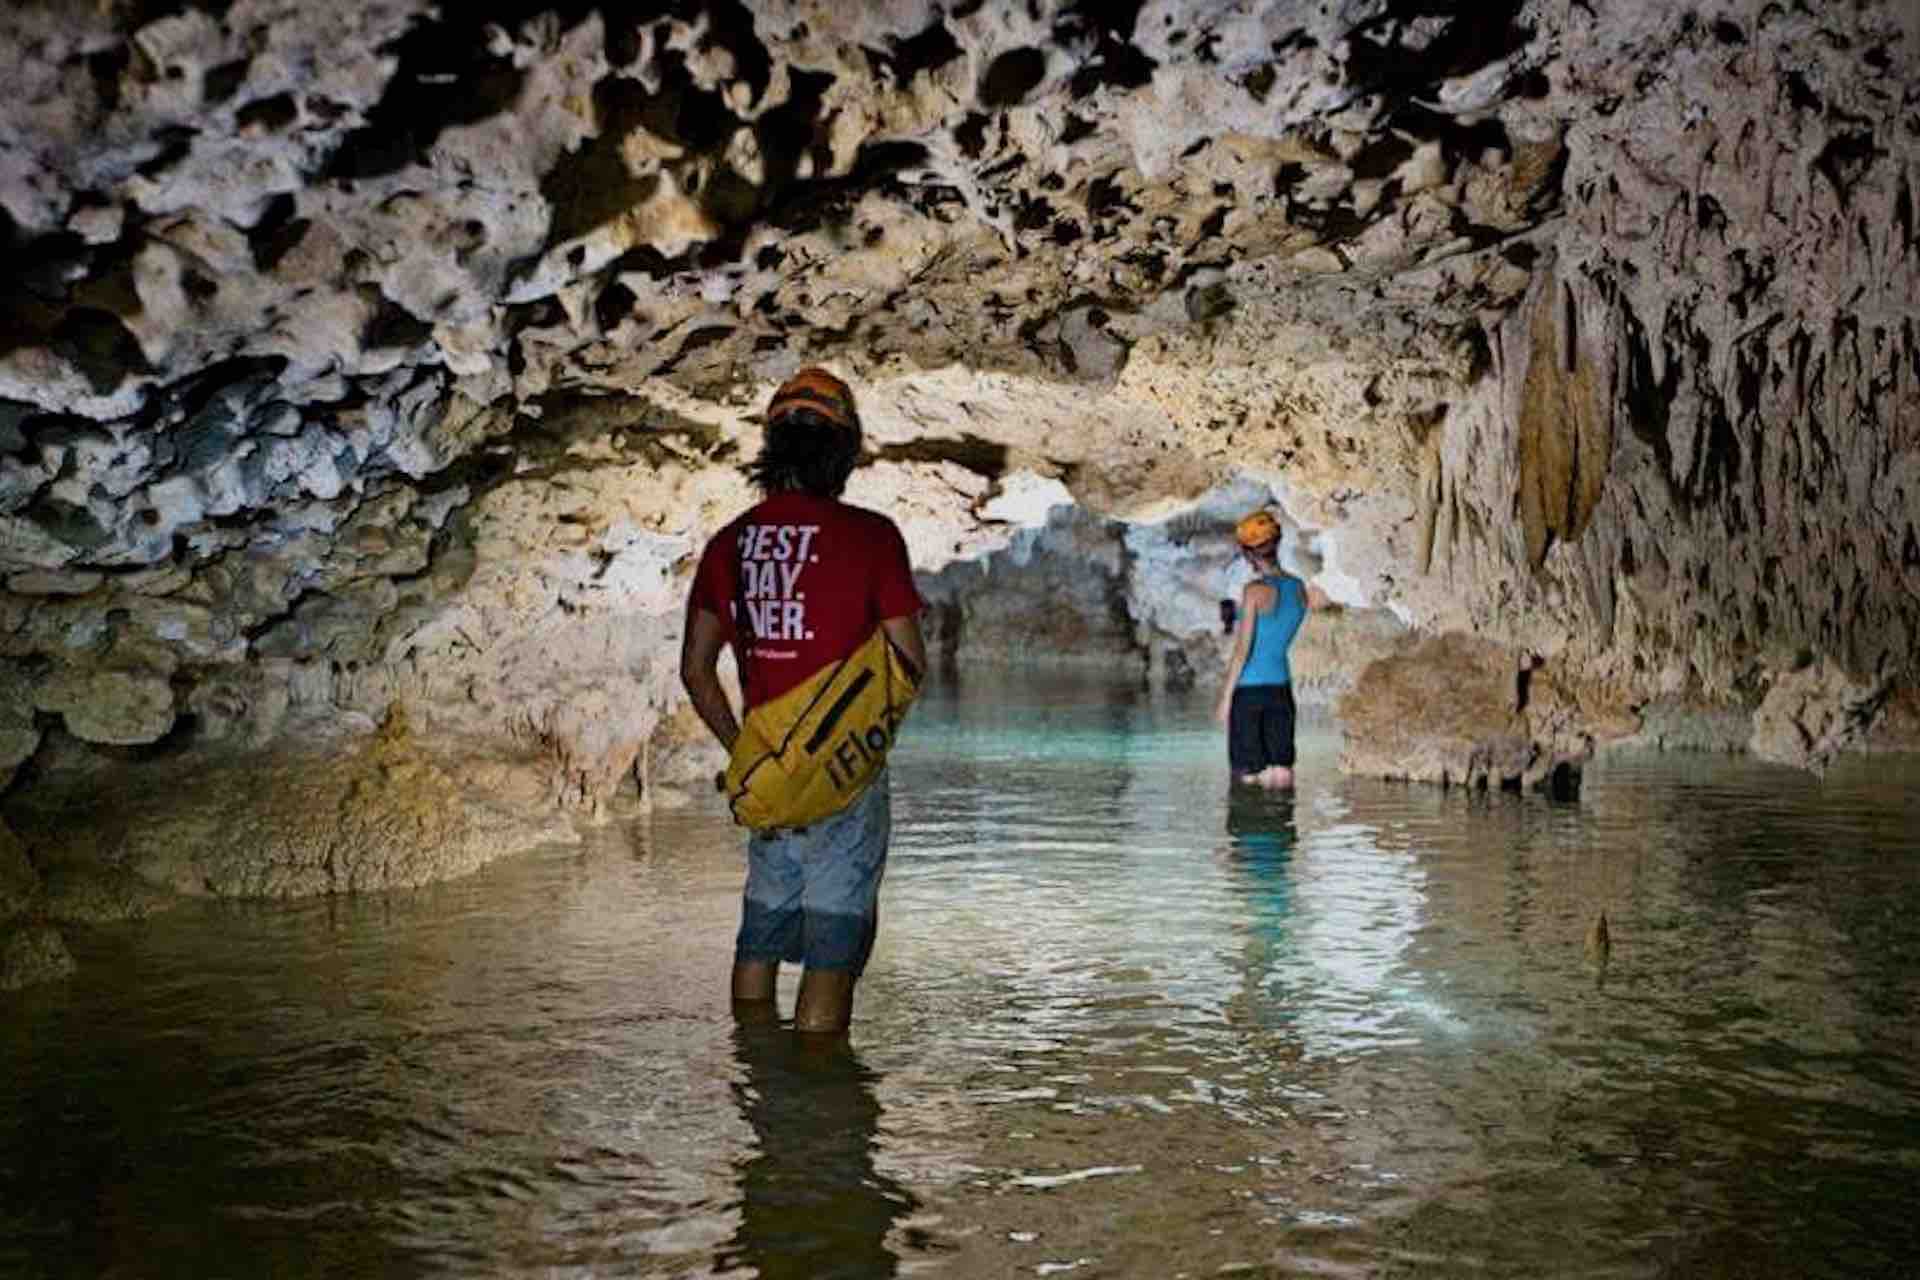 Cenote Riviera Maya Mexico Cancun Tulum Playa del carmen cenote tour exploring cave